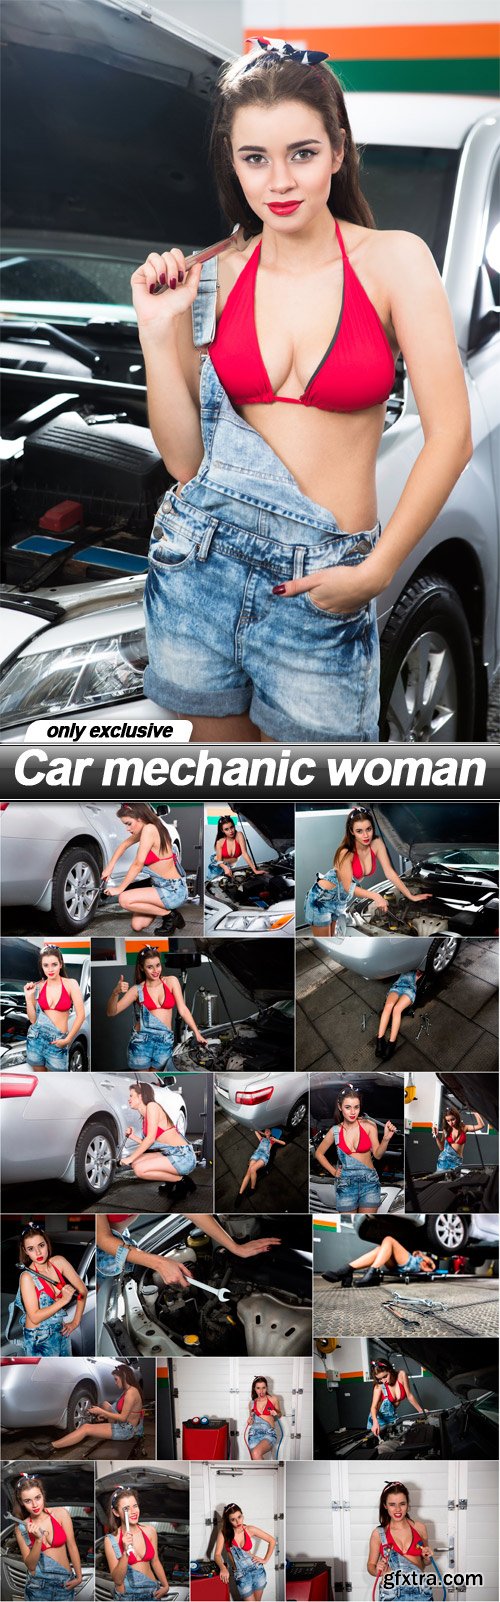 Car mechanic woman - 20 UHQ JPEG